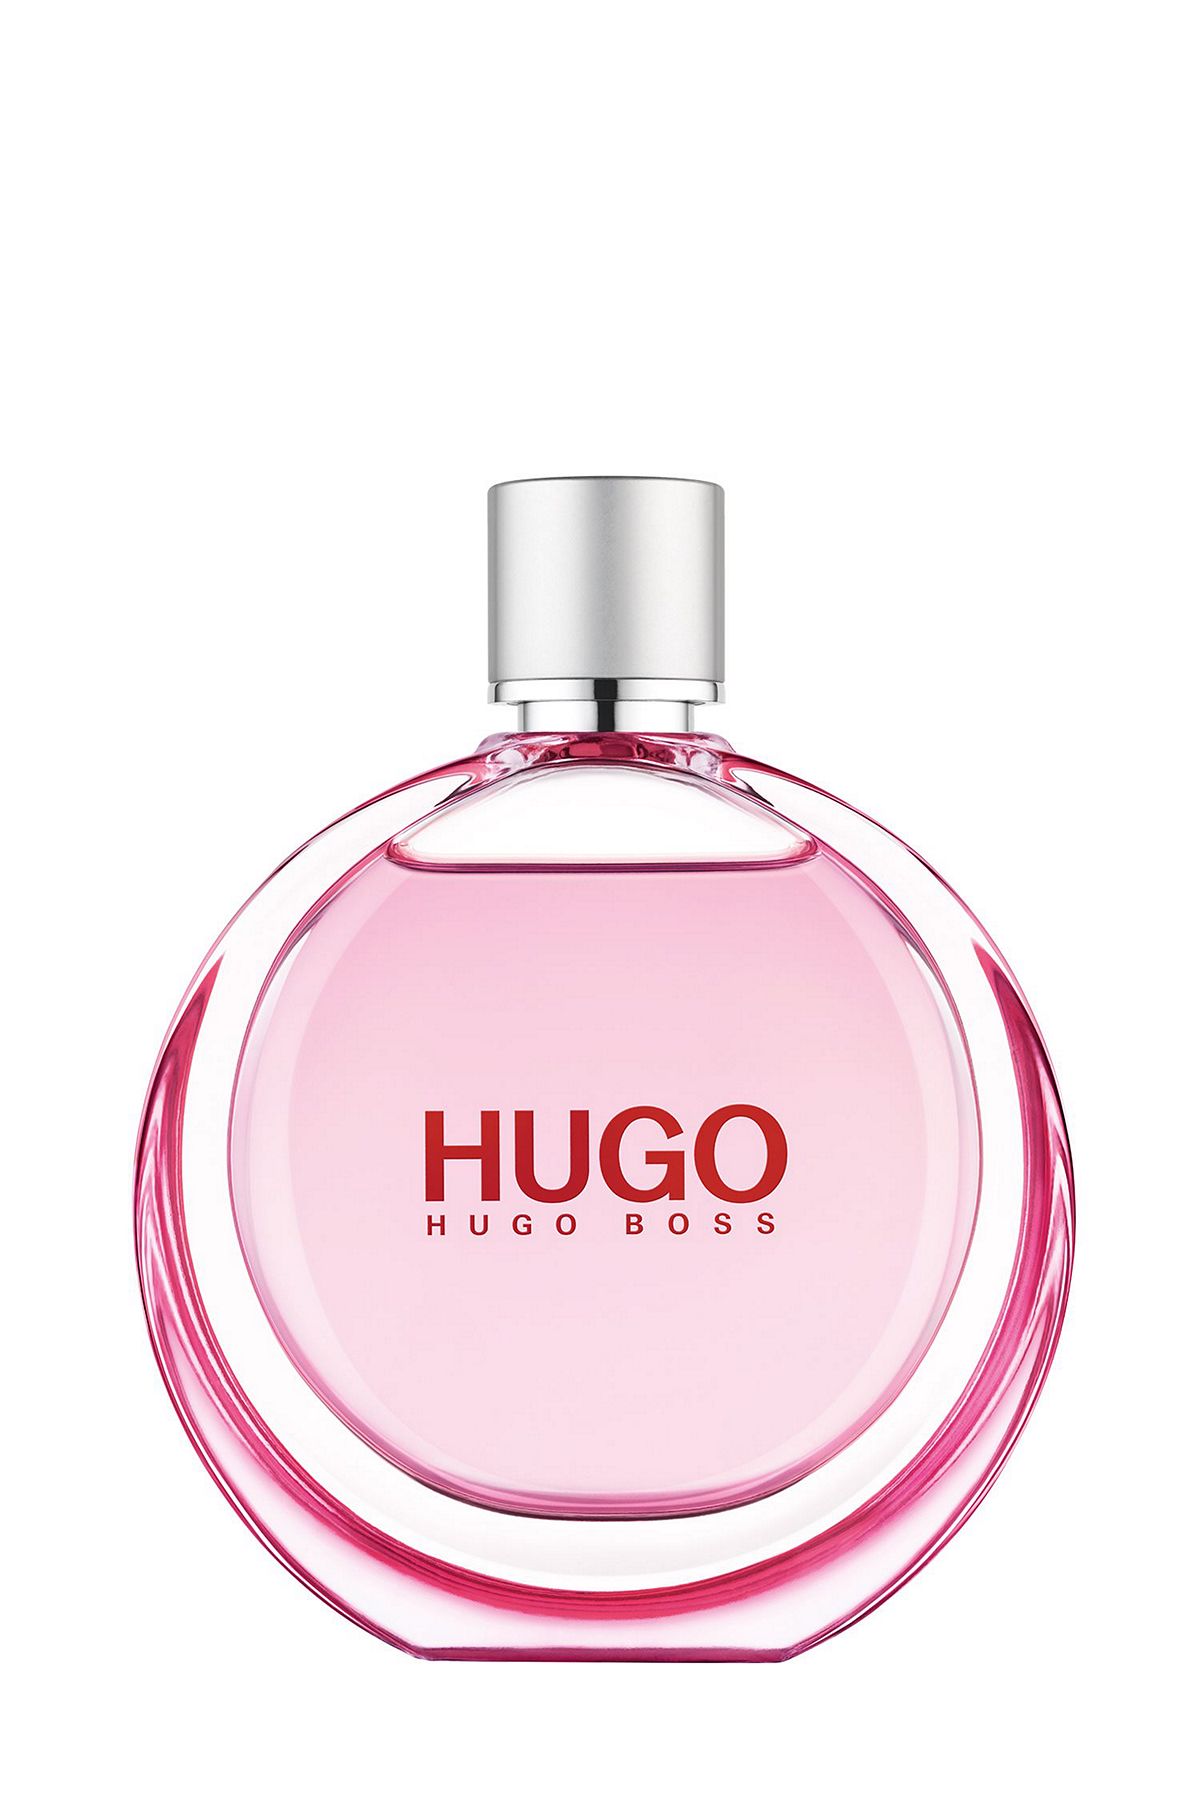 HUGO Woman Extreme 75ml eau de parfum, Assorted-Pre-Pack